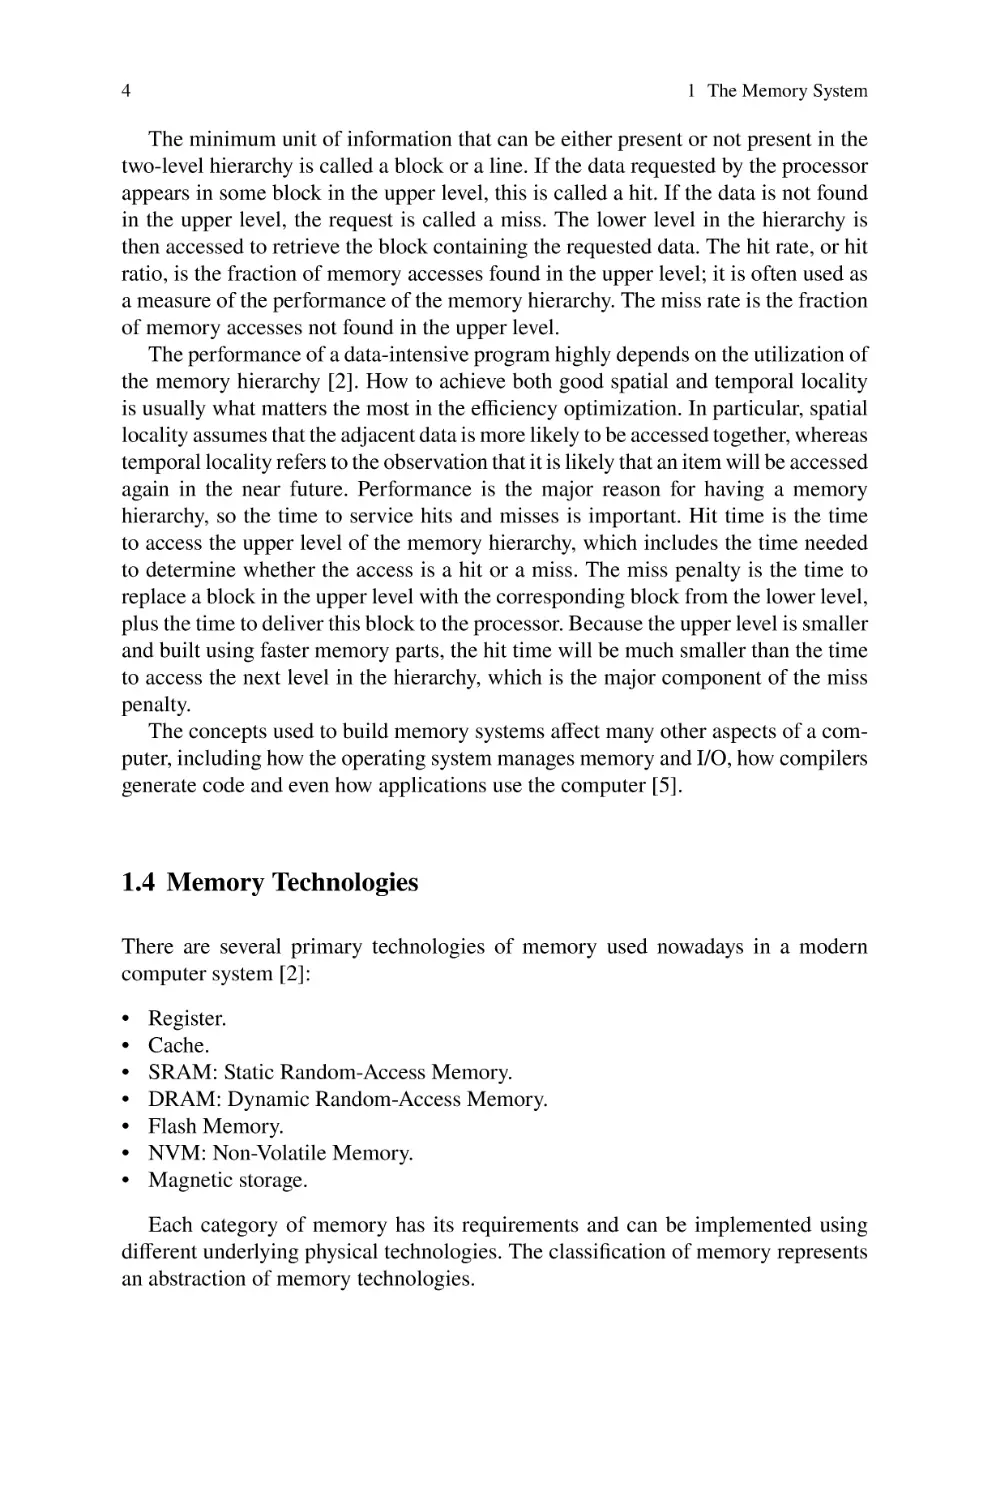 1.4 Memory Technologies